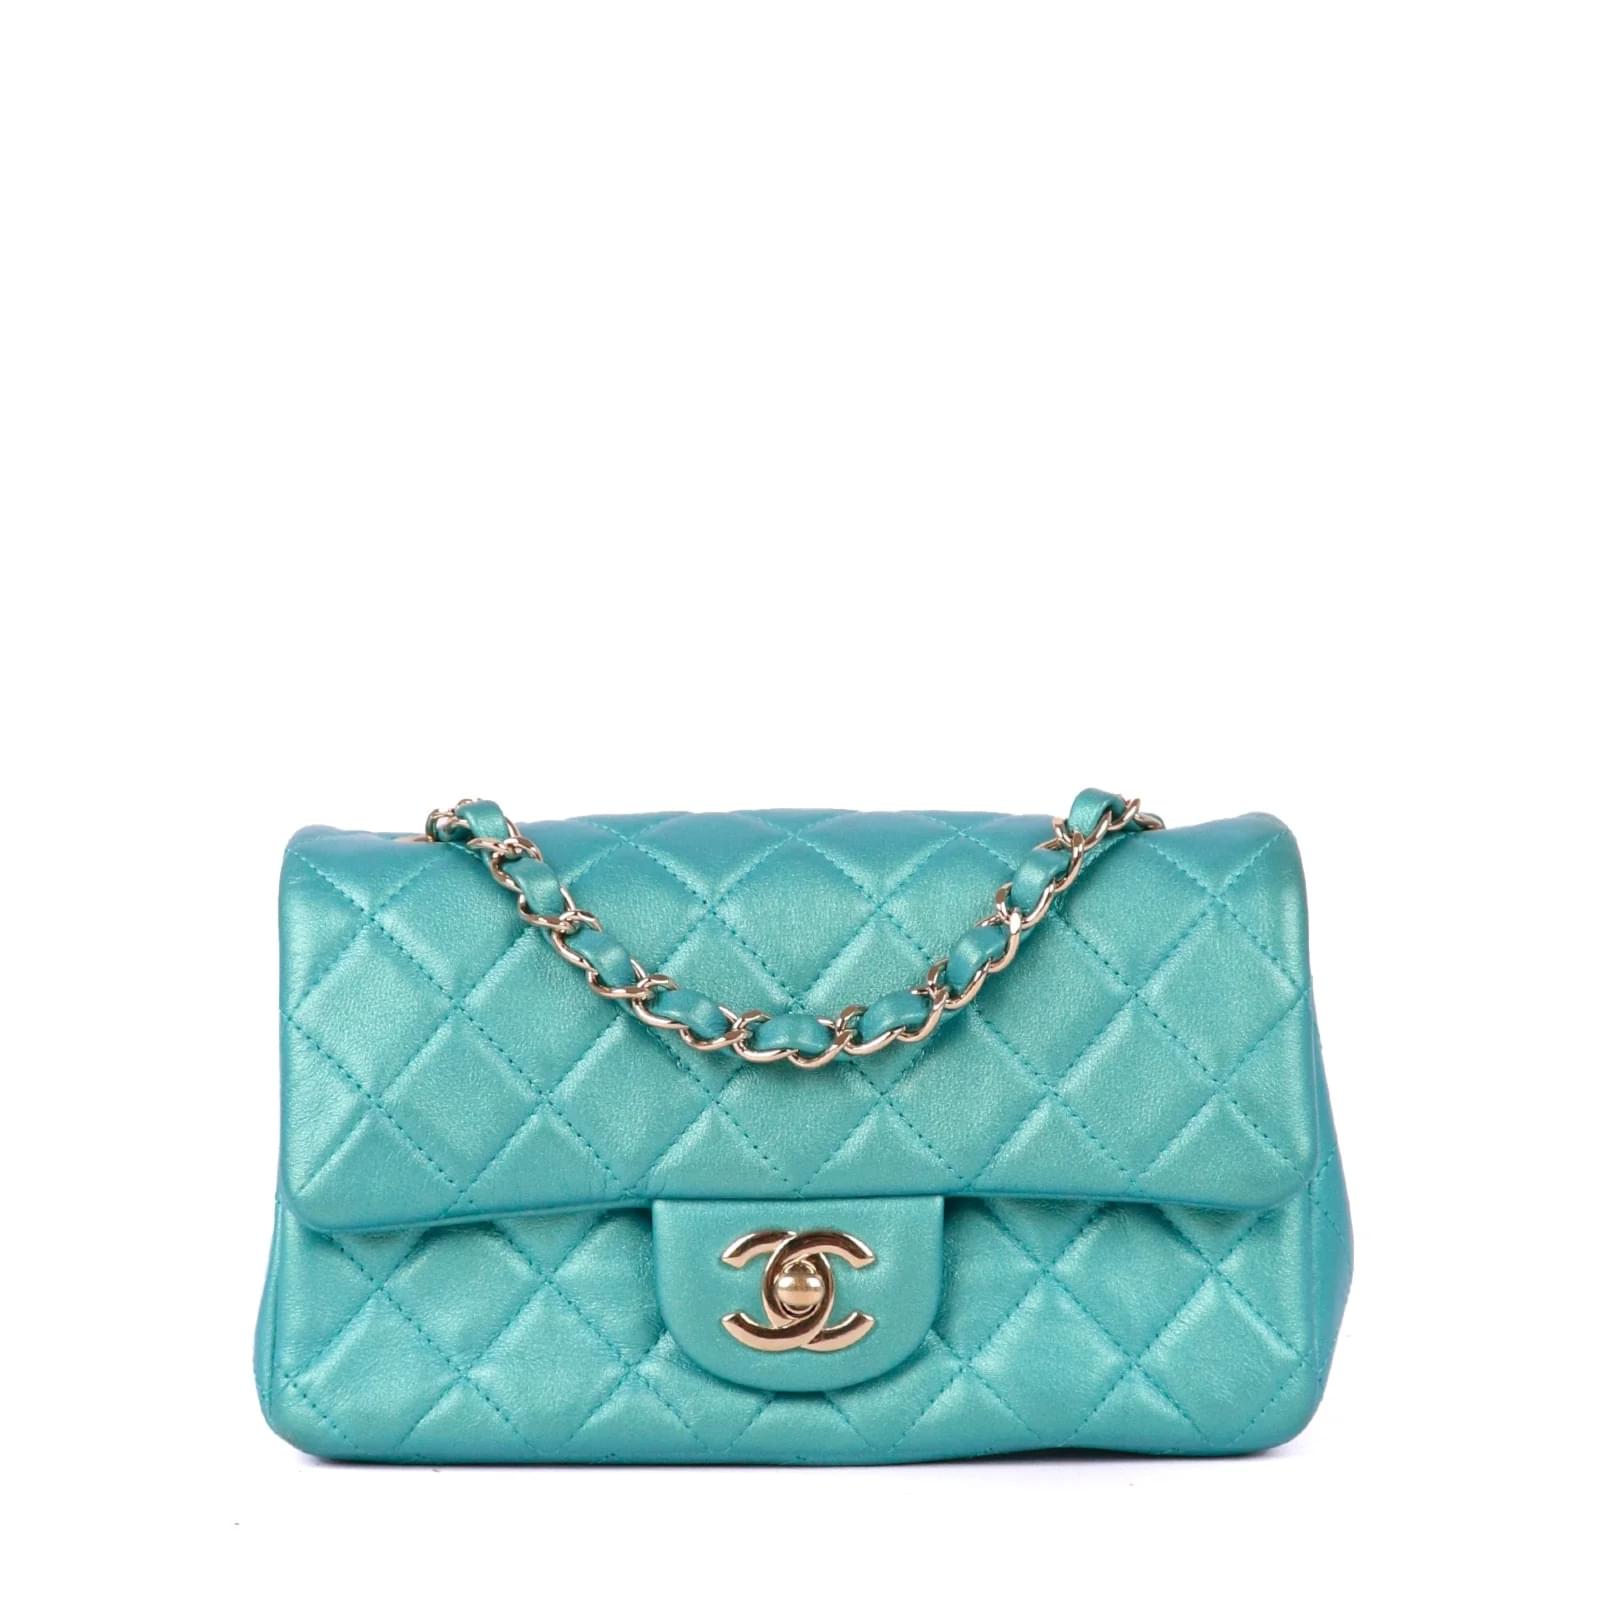 Chanel - Timeless Bleu Tiffany Timeless Timeless Bag Blue Leather